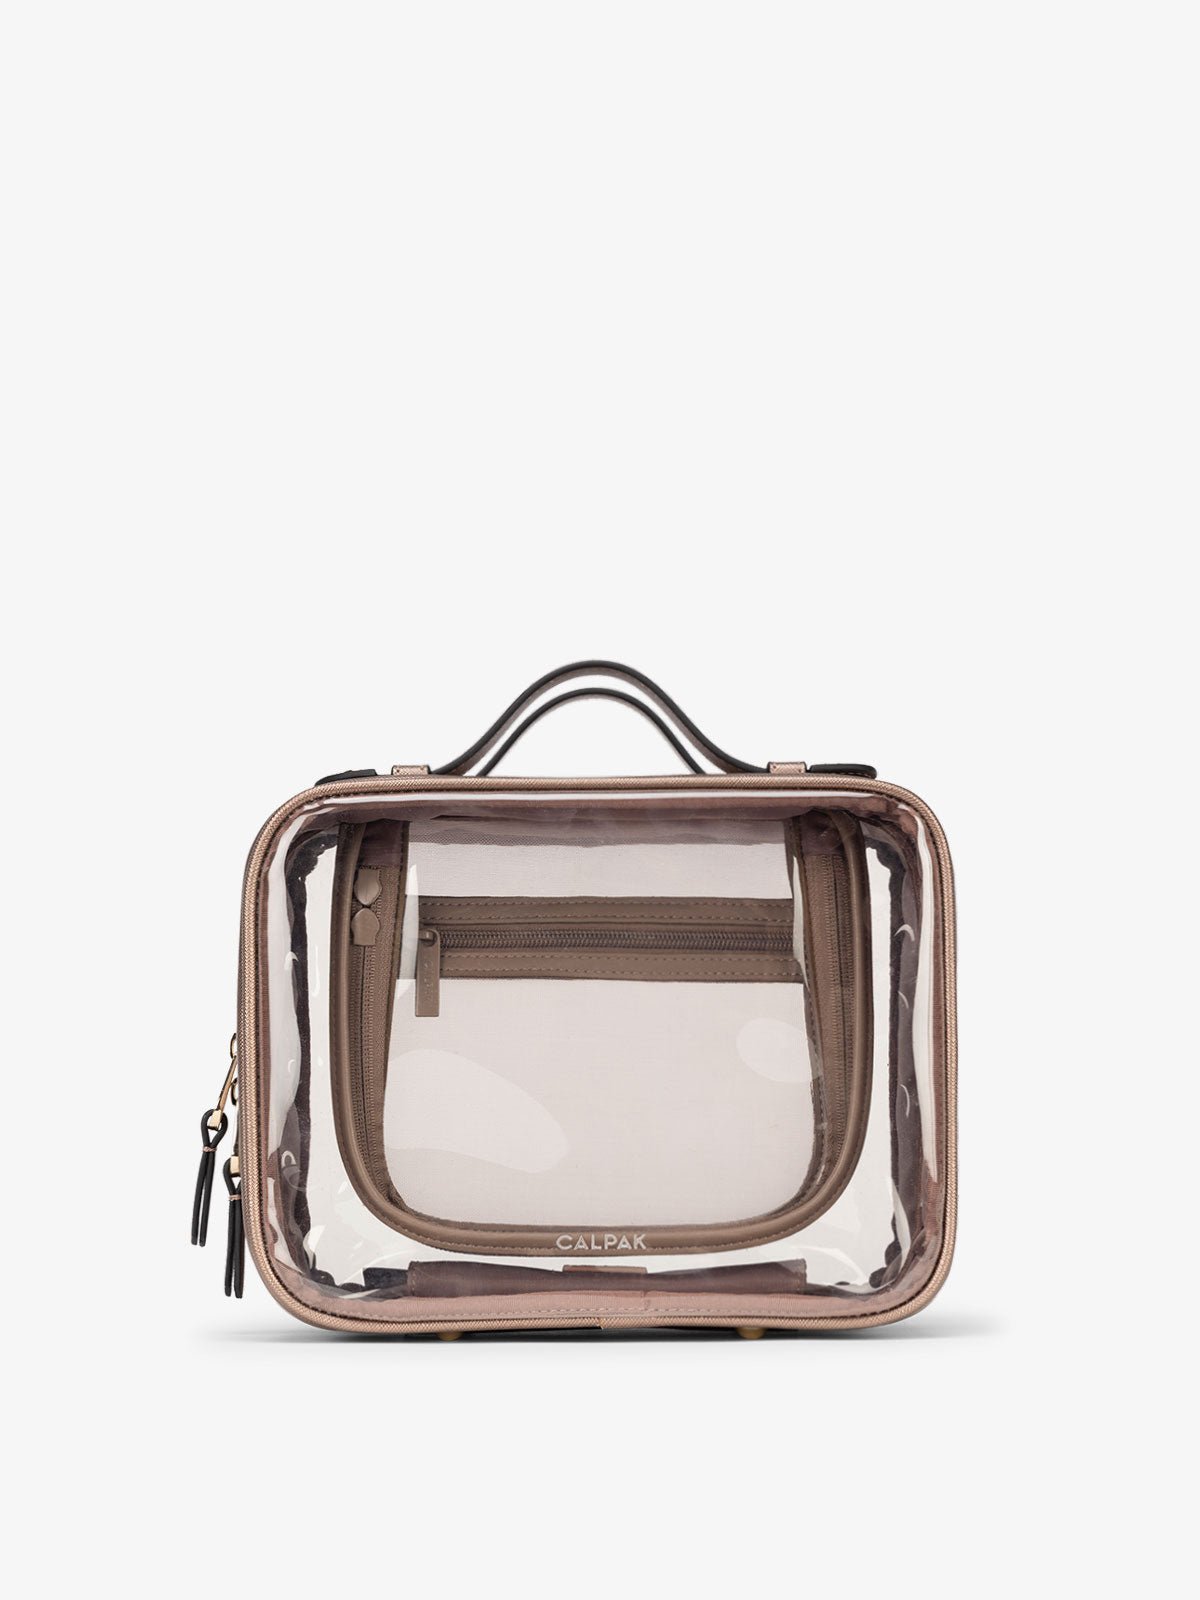 CALPAK Medium clear makeup bag with compartments in metallic bronze